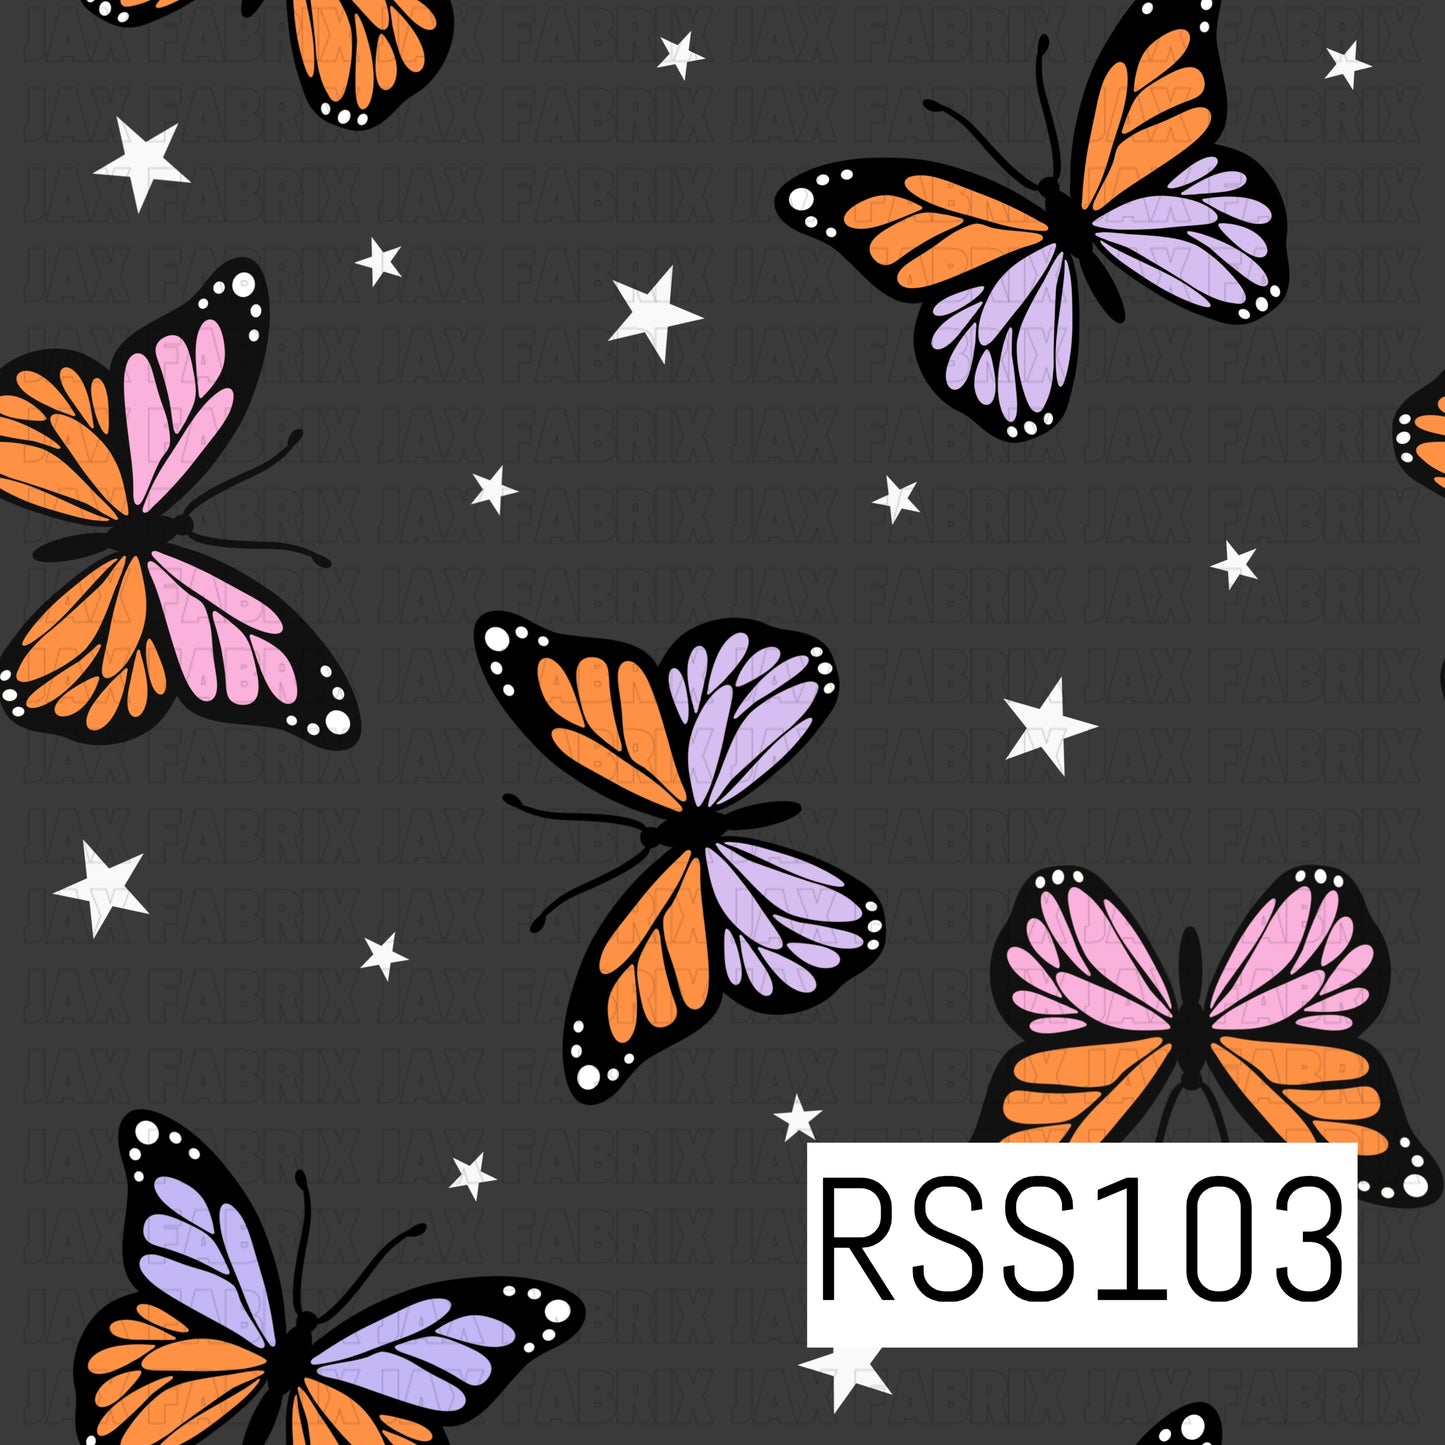 RSS103